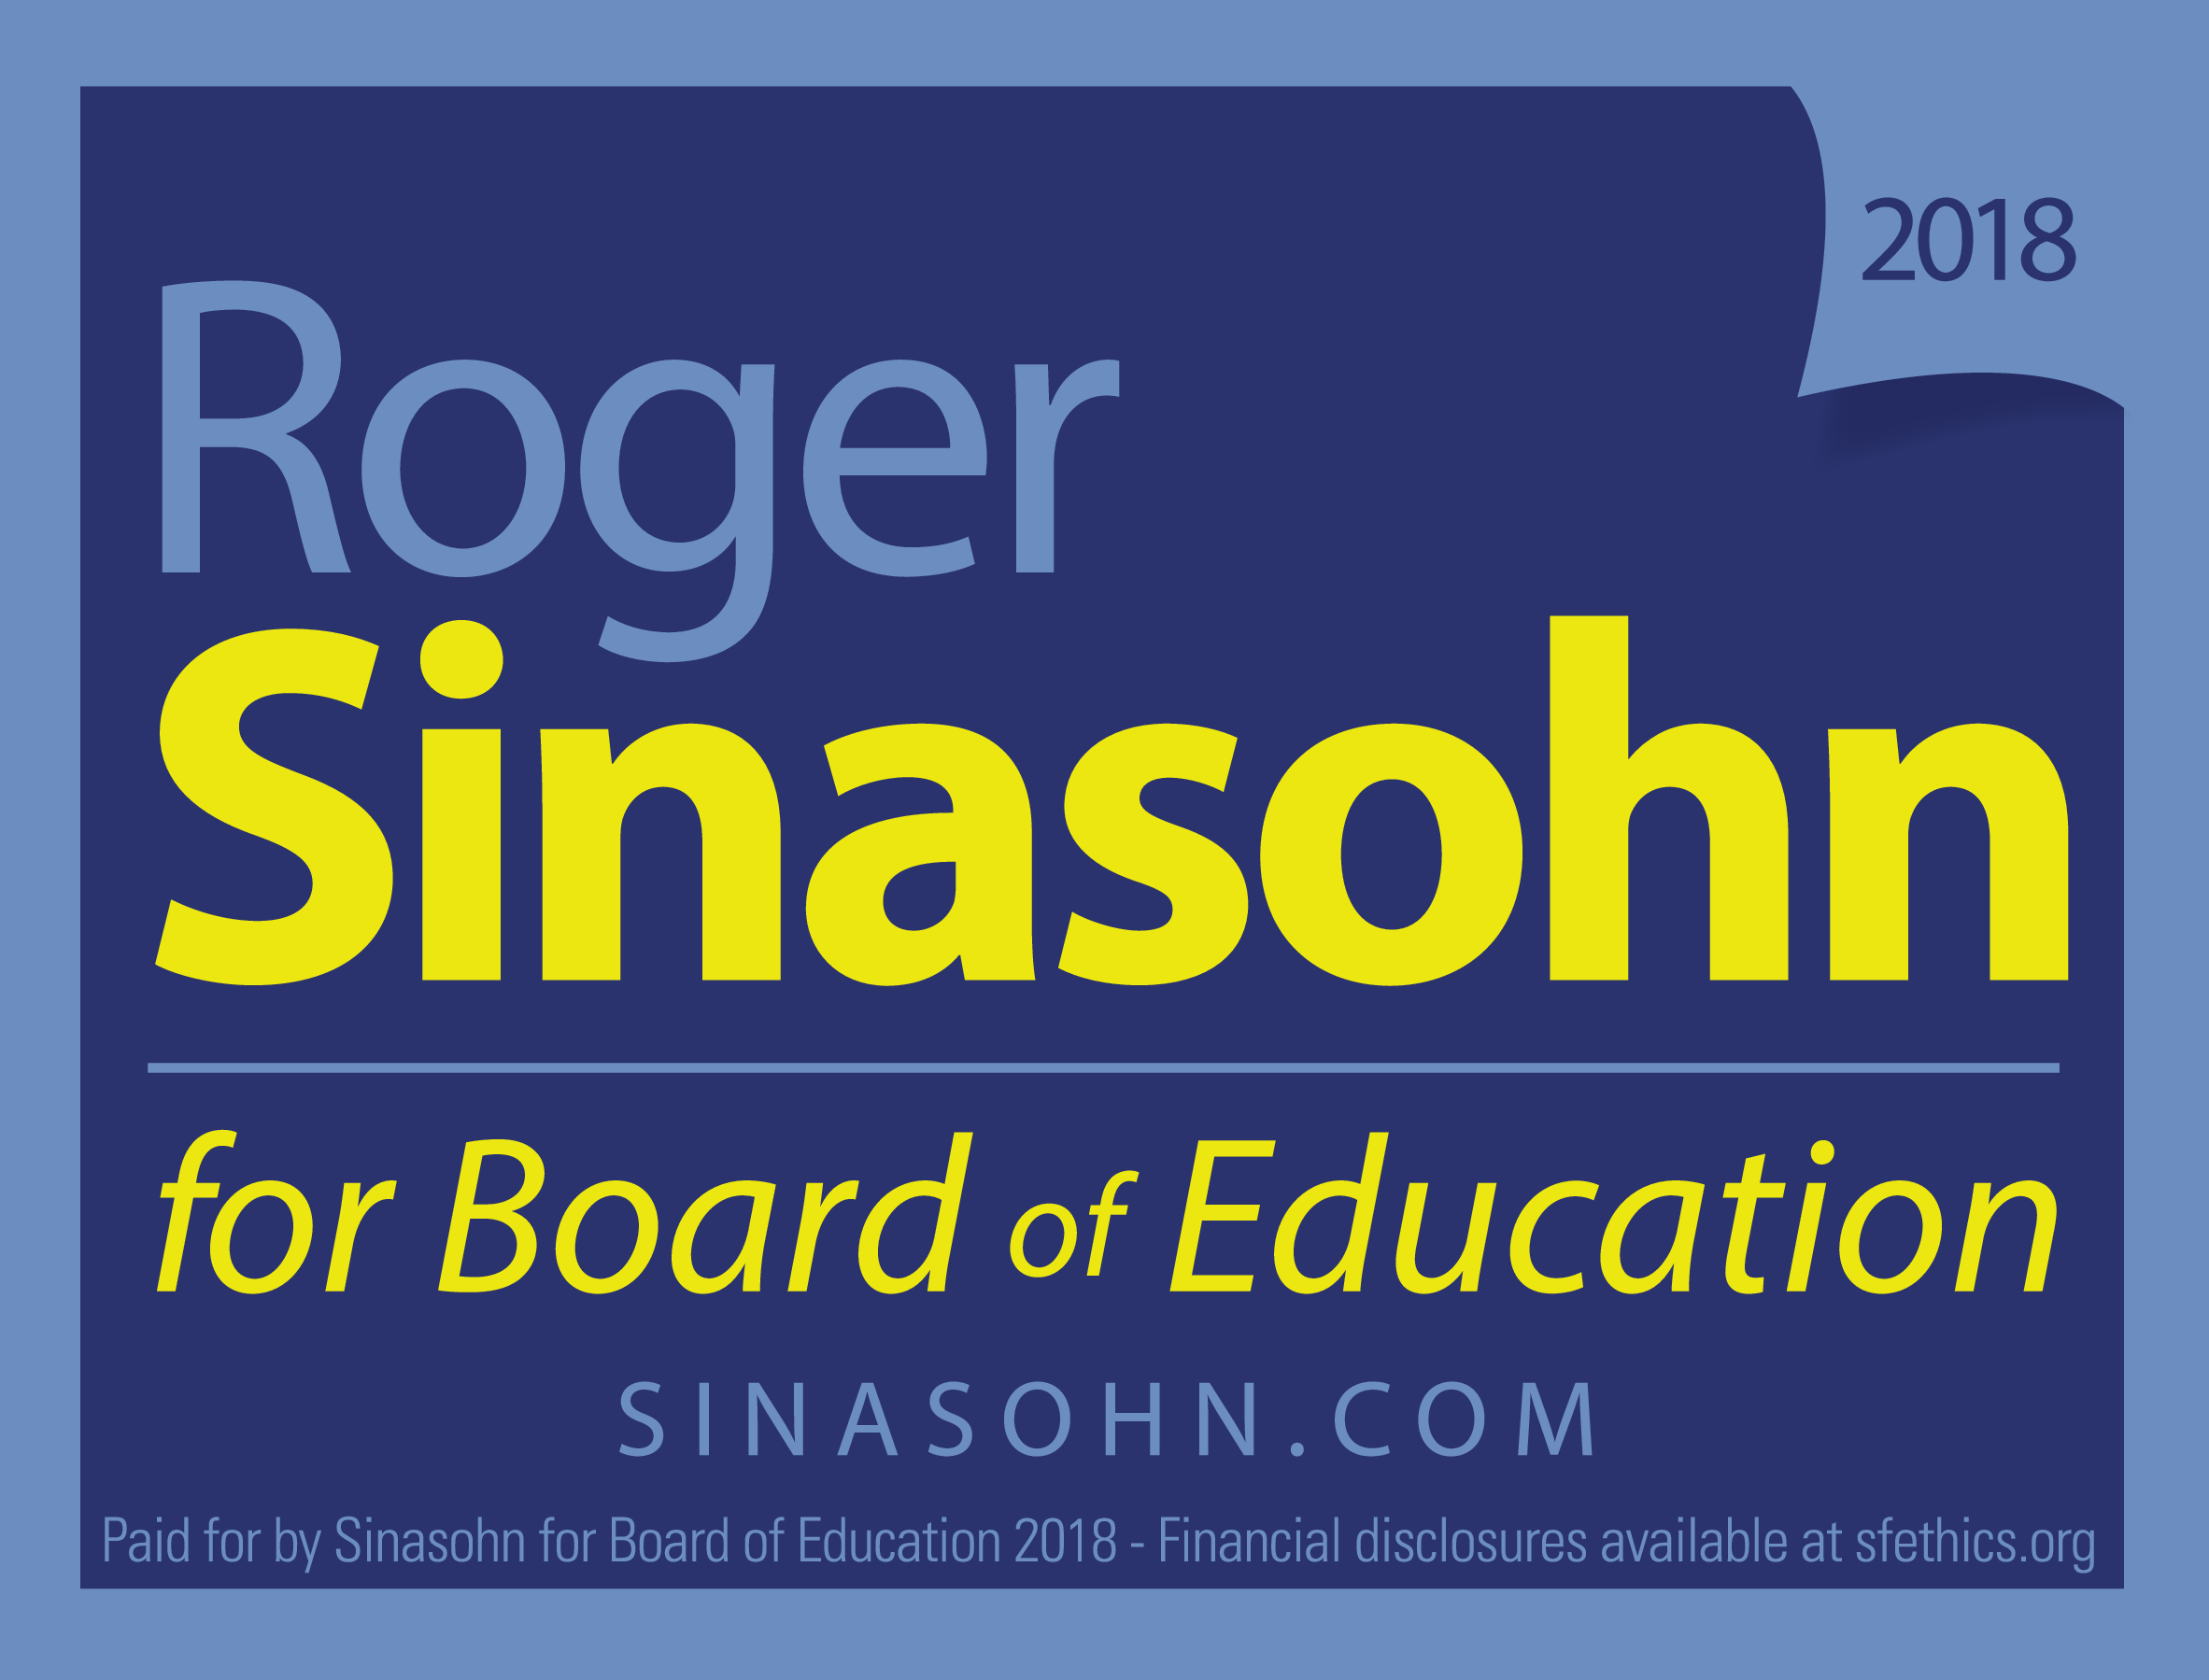 Roger Sinasohn for Board of Education 2018